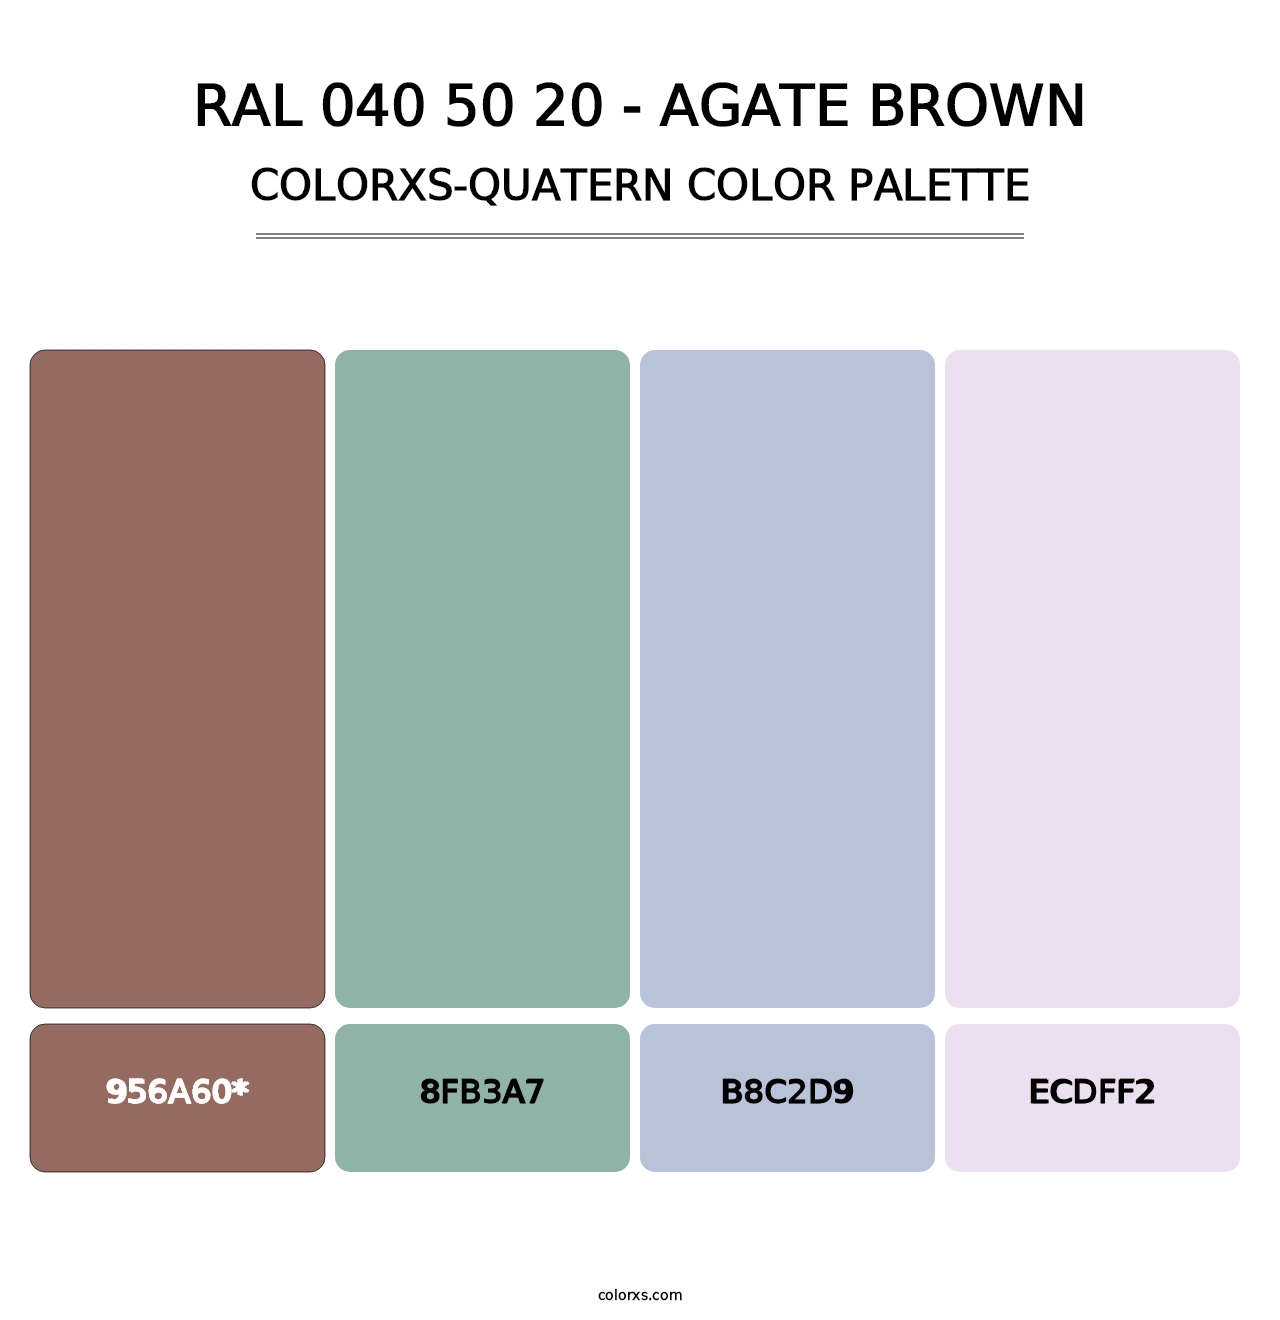 RAL 040 50 20 - Agate Brown - Colorxs Quatern Palette